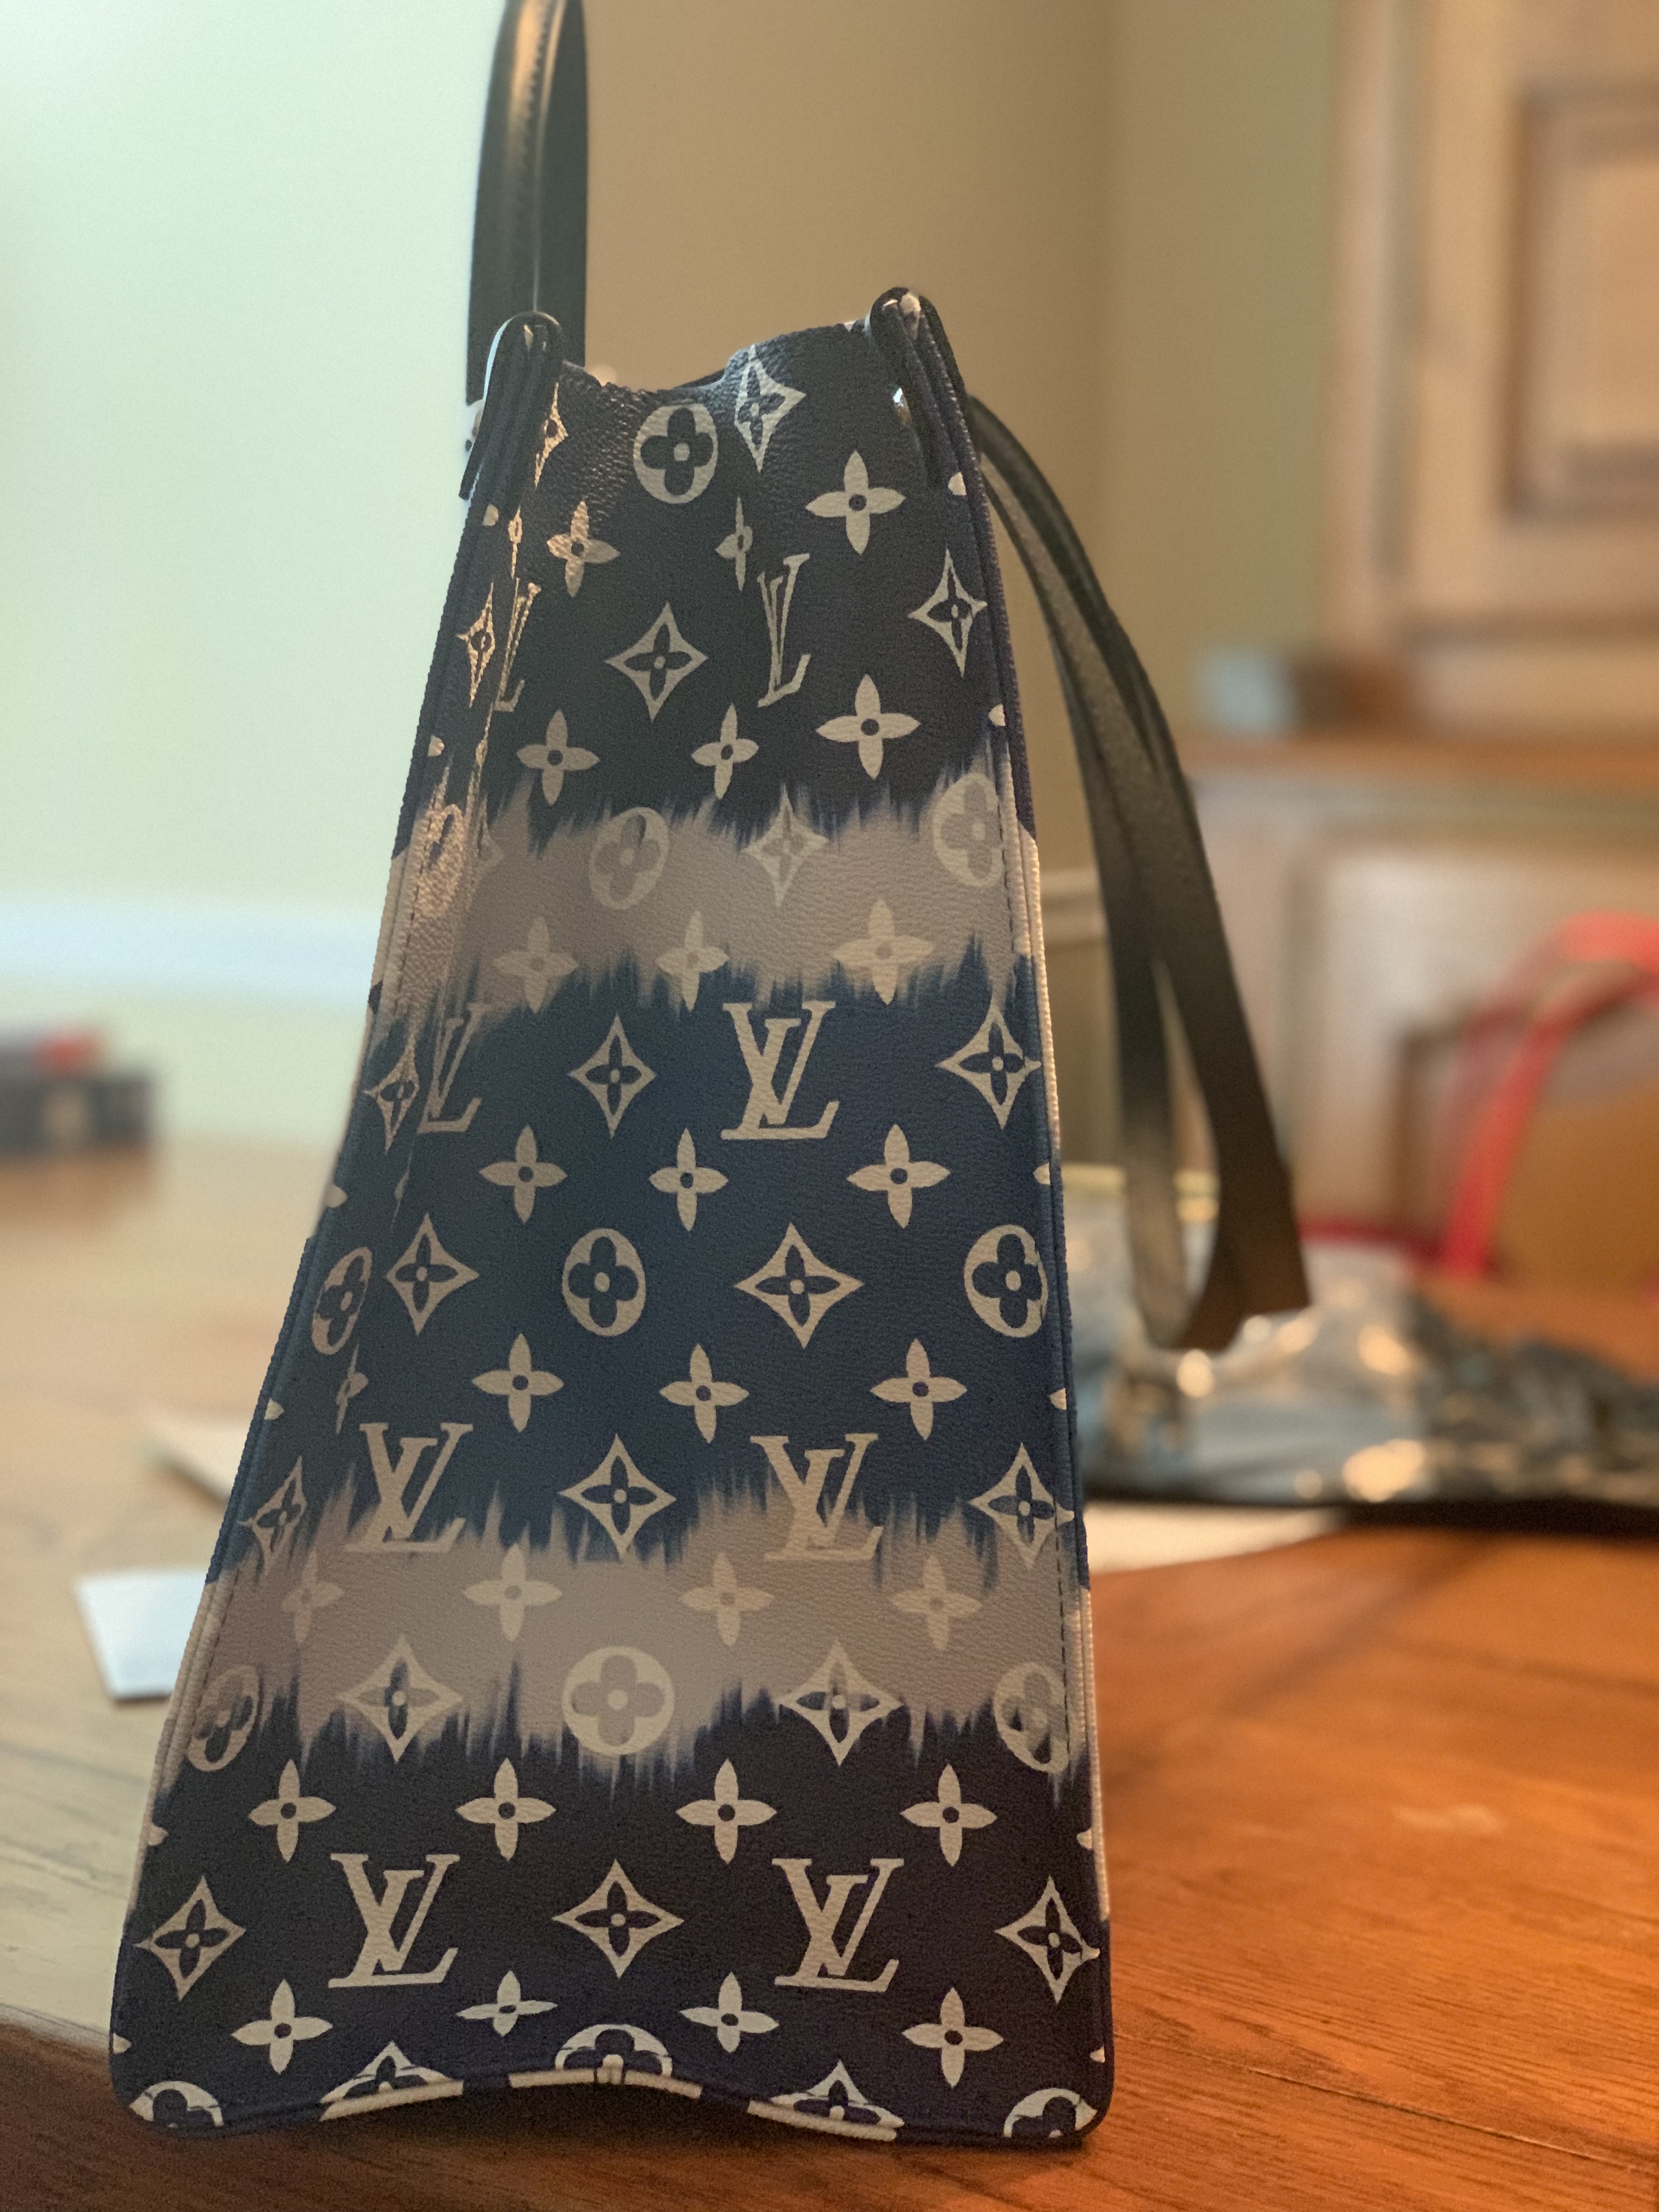 Louis Vuitton Neverfull Luxe DH Handbag Review 